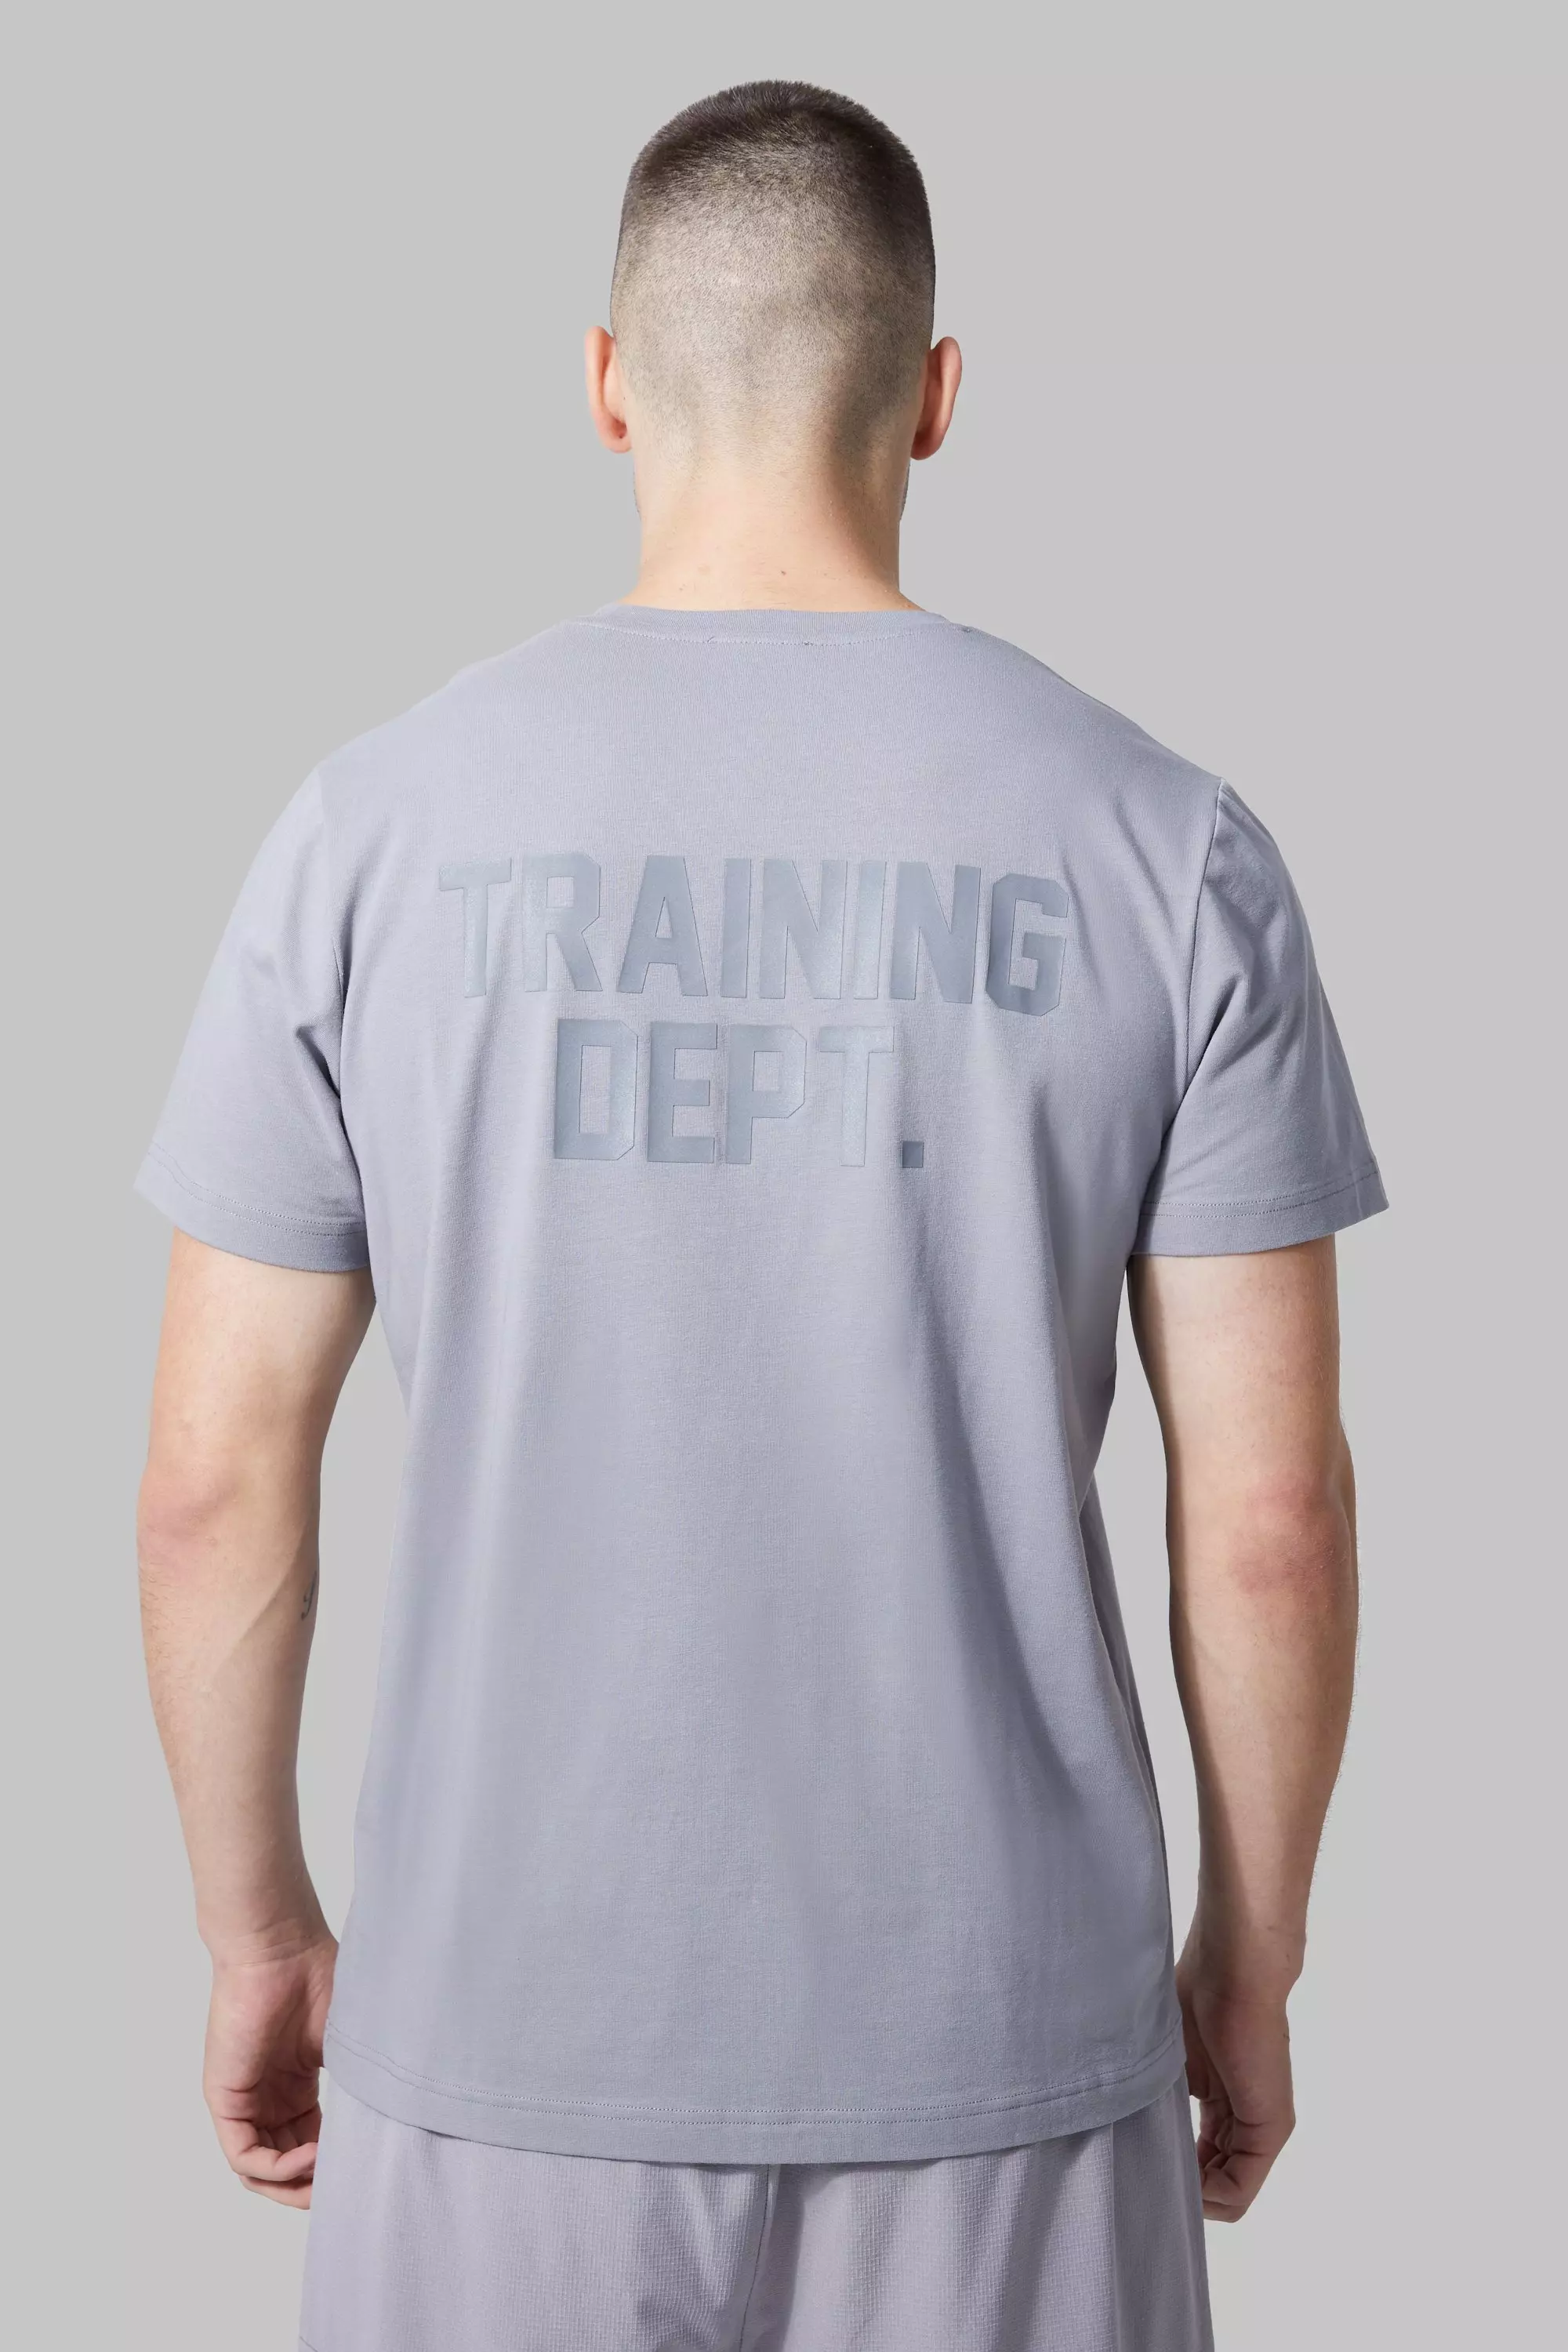 Tall Active Training Dept Performance Slim T-shirt Light grey